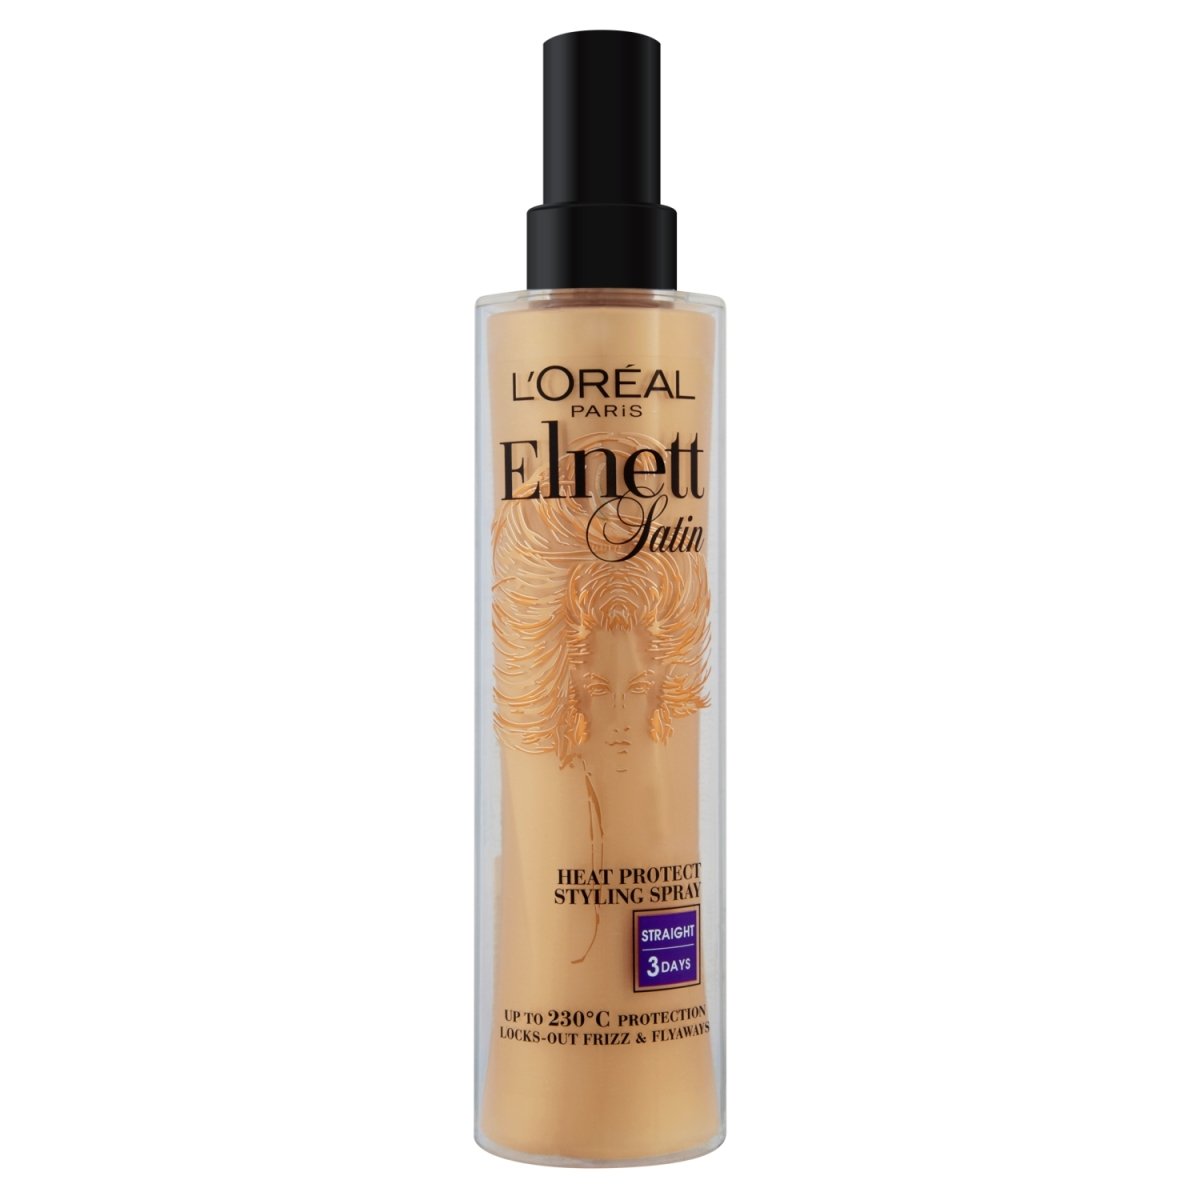 L'Oreal Elnett Heat Protect Spray 170ml Sleek - Intamarque 3600522280972